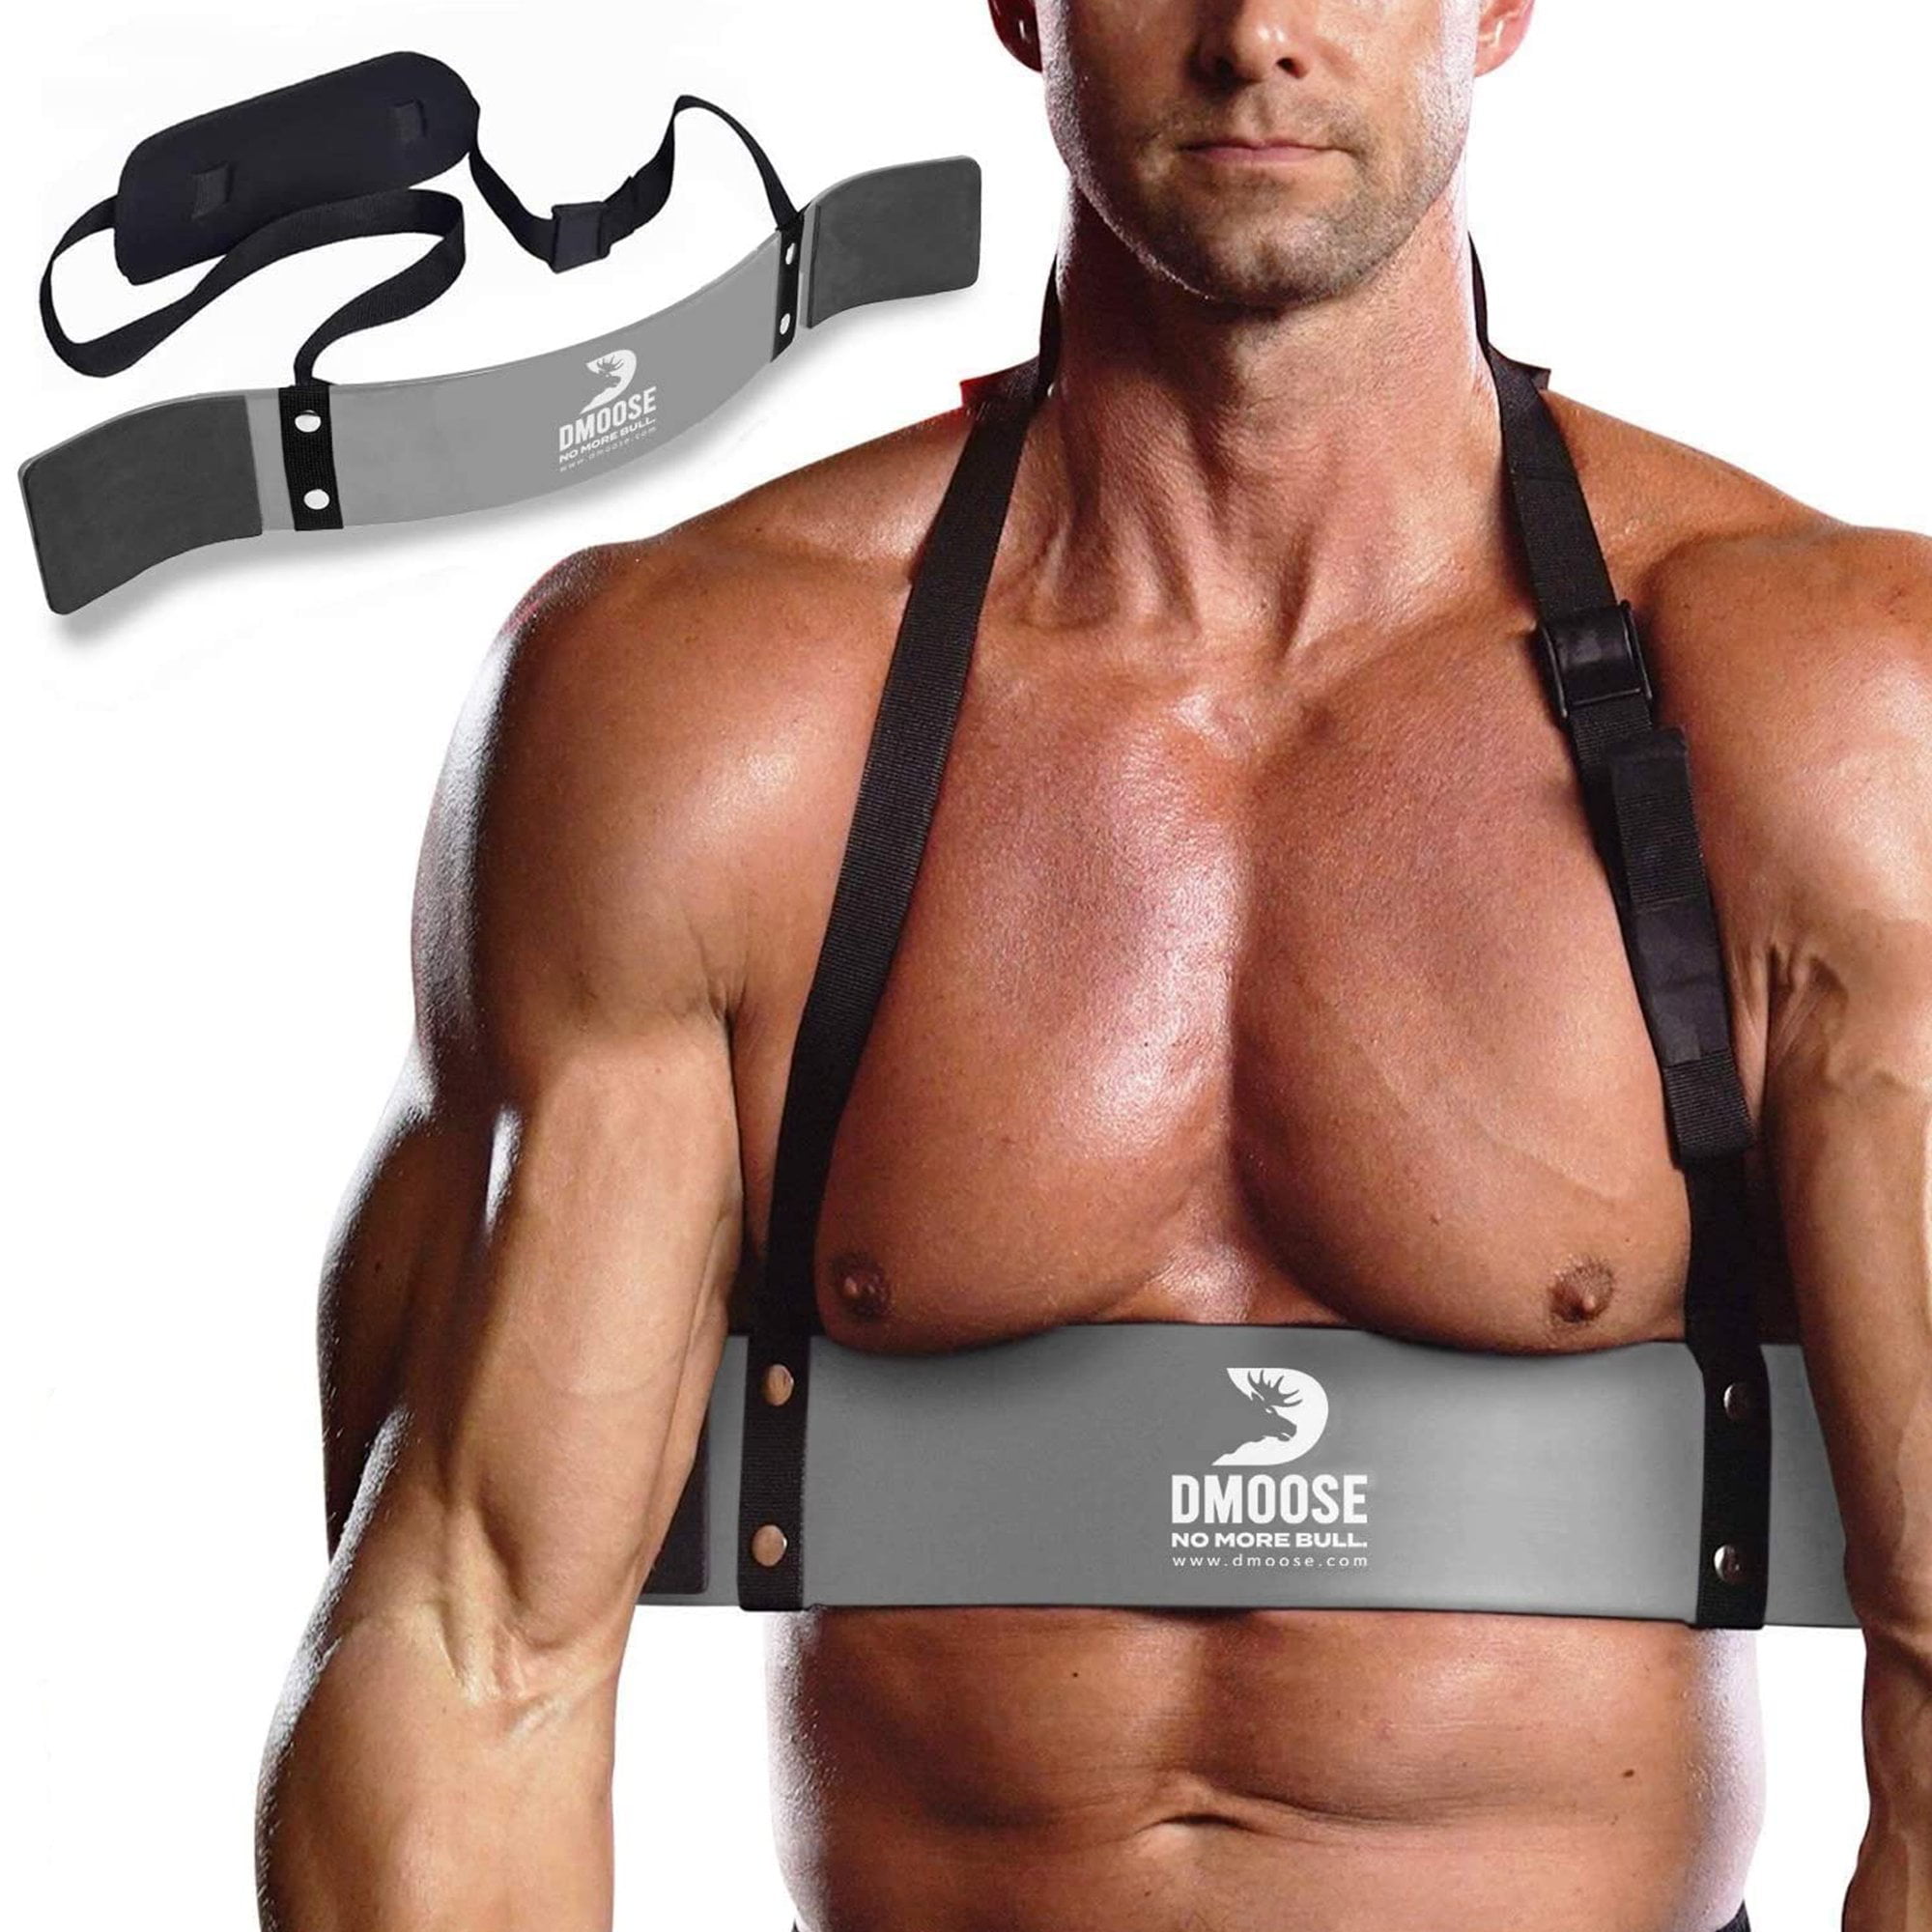 YOSOO Weightlifting Arm Blaster Biceps Isolator Gym Support Strap Bodybuilder T 